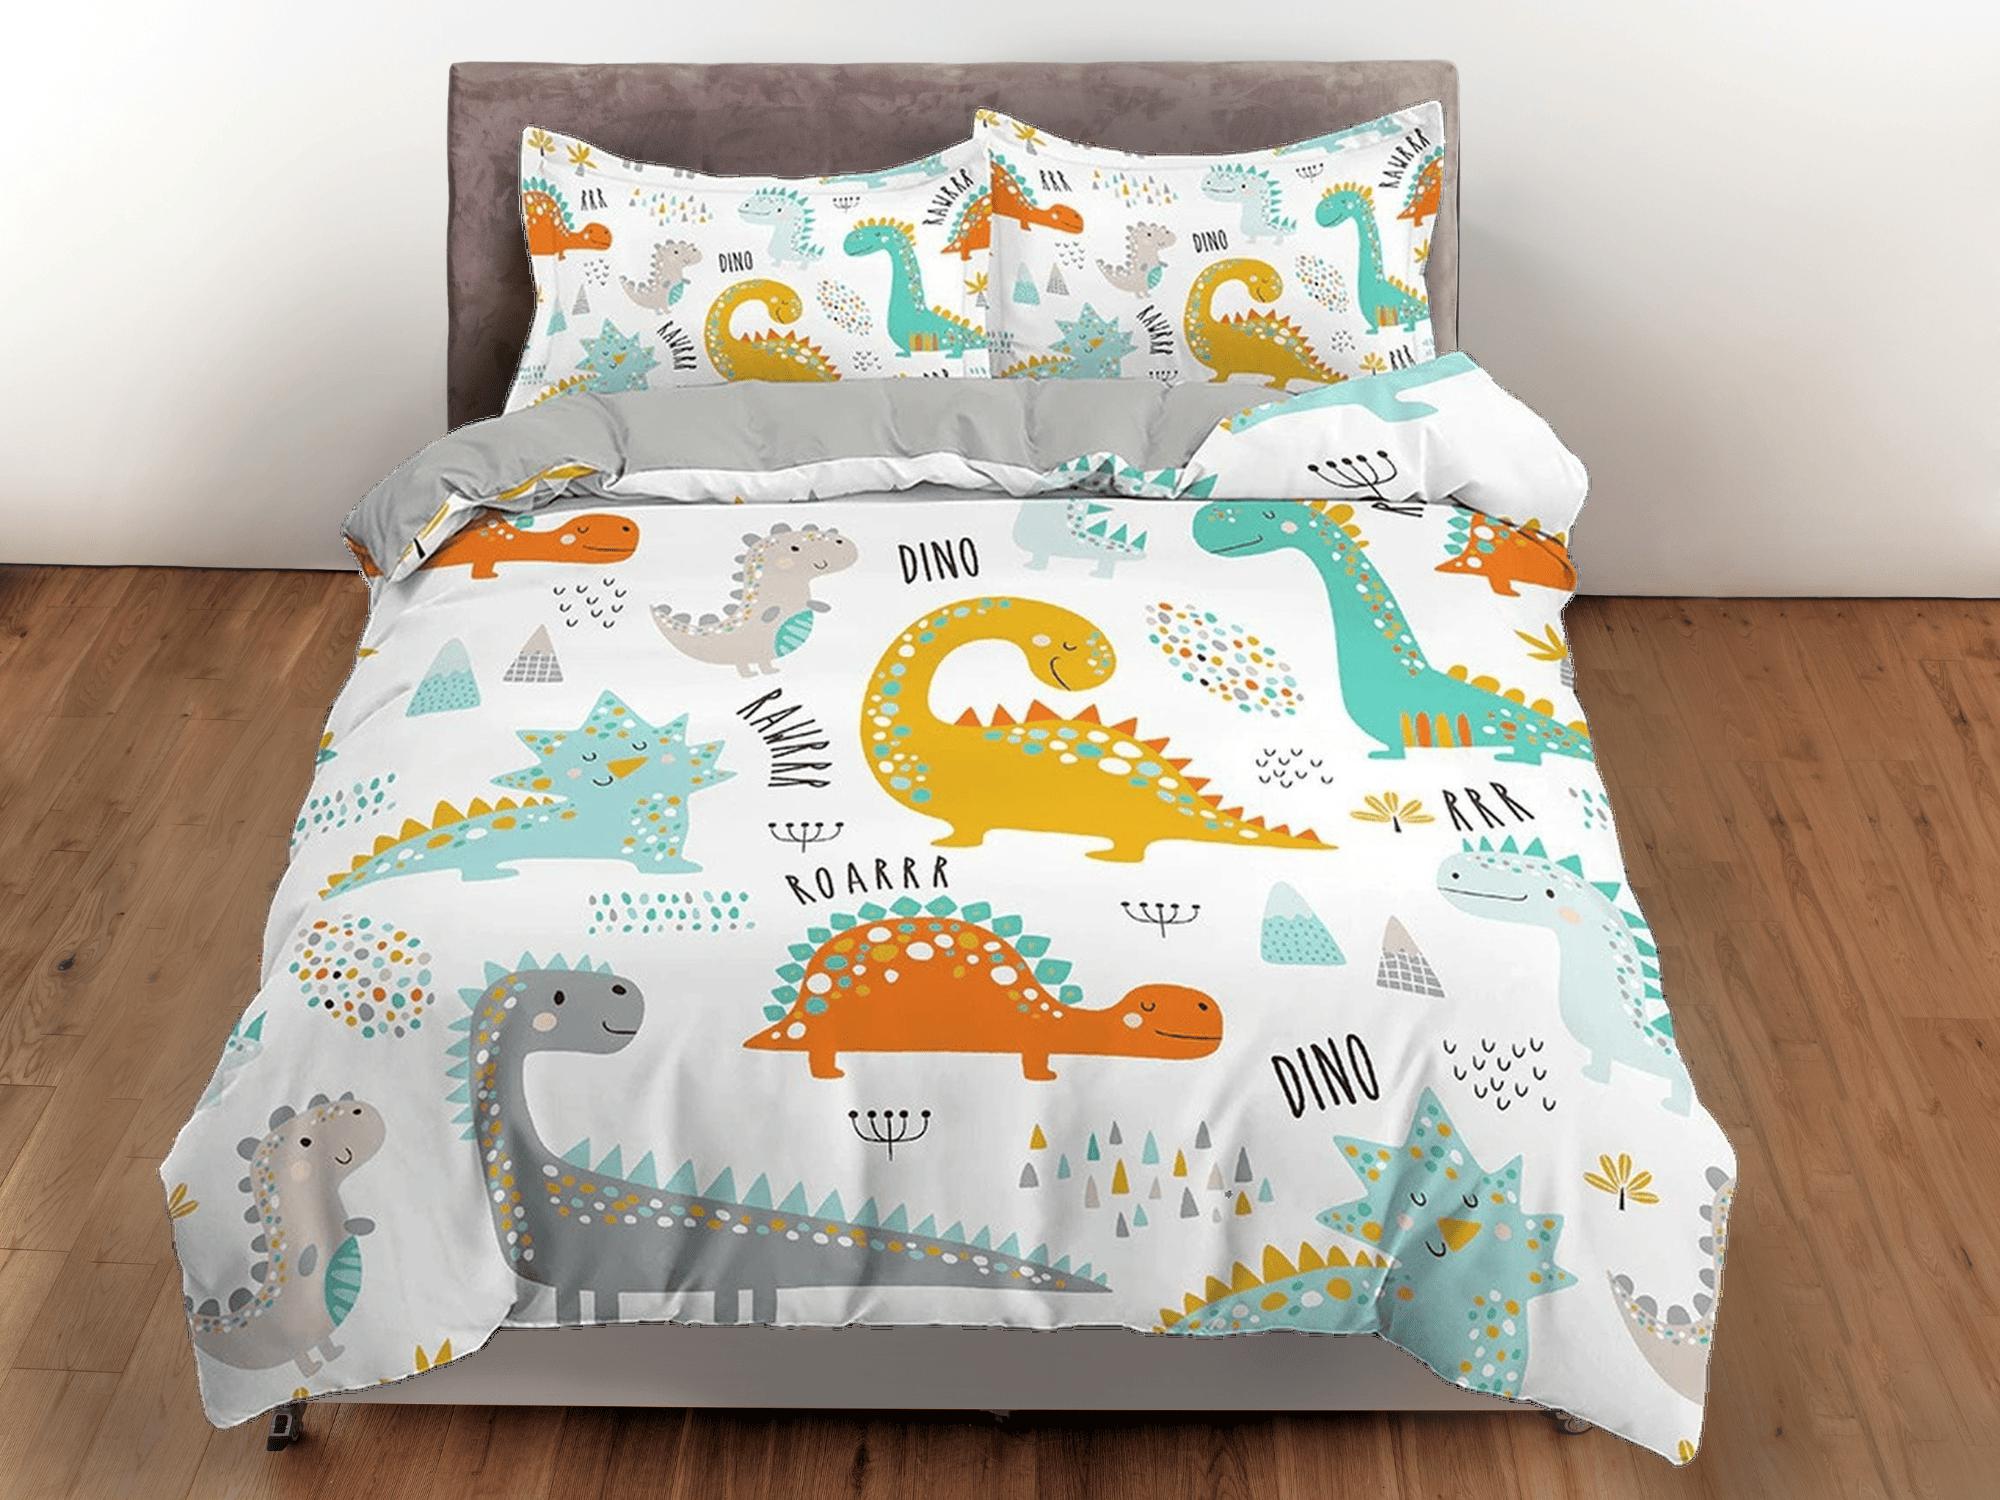 daintyduvet Colorful Dinosaurs Bedding, Duvet Cover Set & Pillowcase, Zipper Bedding, Dorm Bedding, Teens Adult Duvet King Queen Full Twin Single